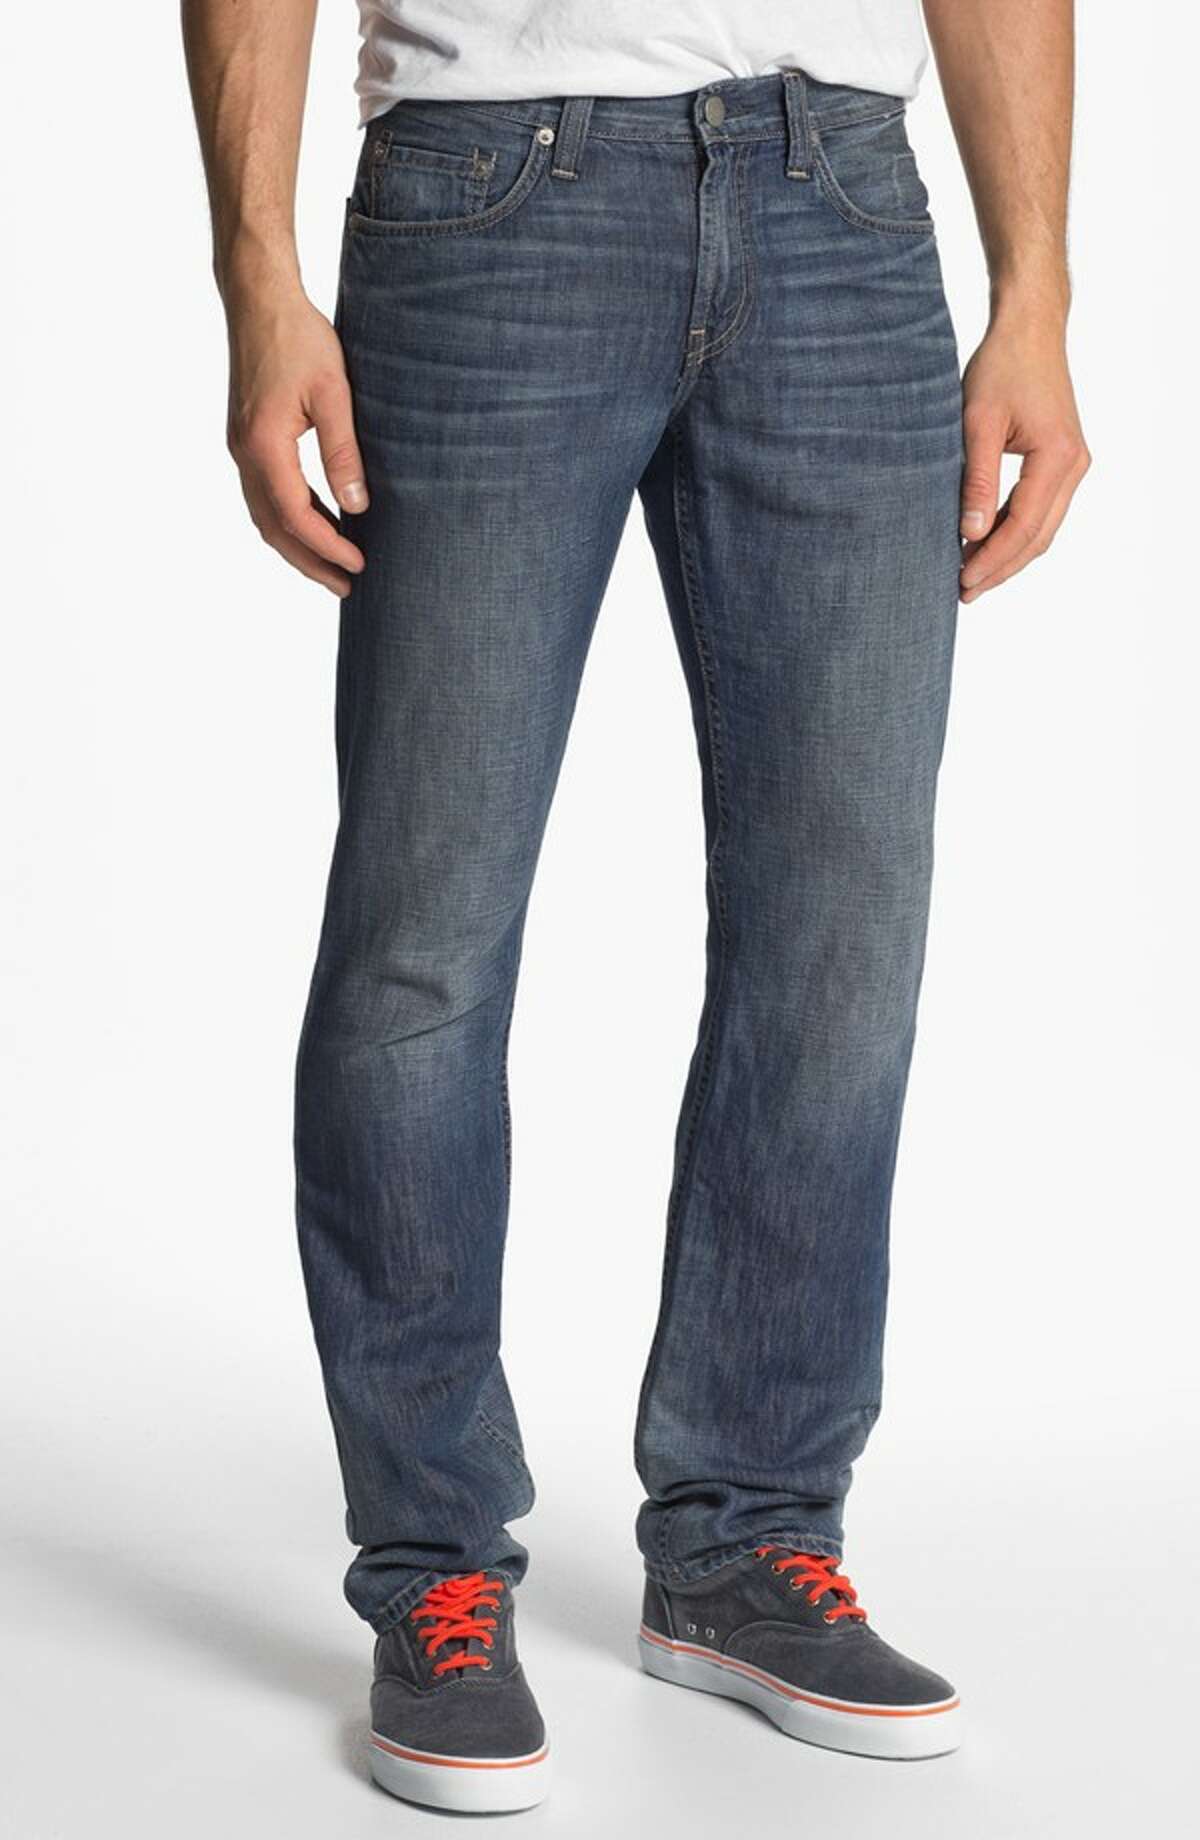 J Brand Kane jeans, $249